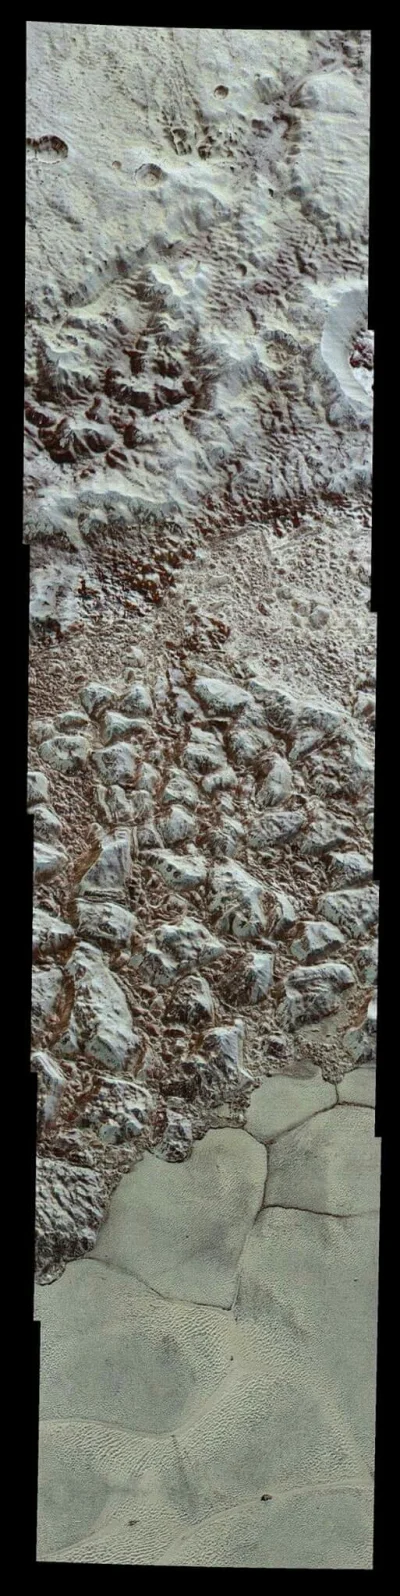 crab_nebula - Pluton #newhorizons #pluton #kosmos 
 http://solarsystem.nasa.gov/plane...